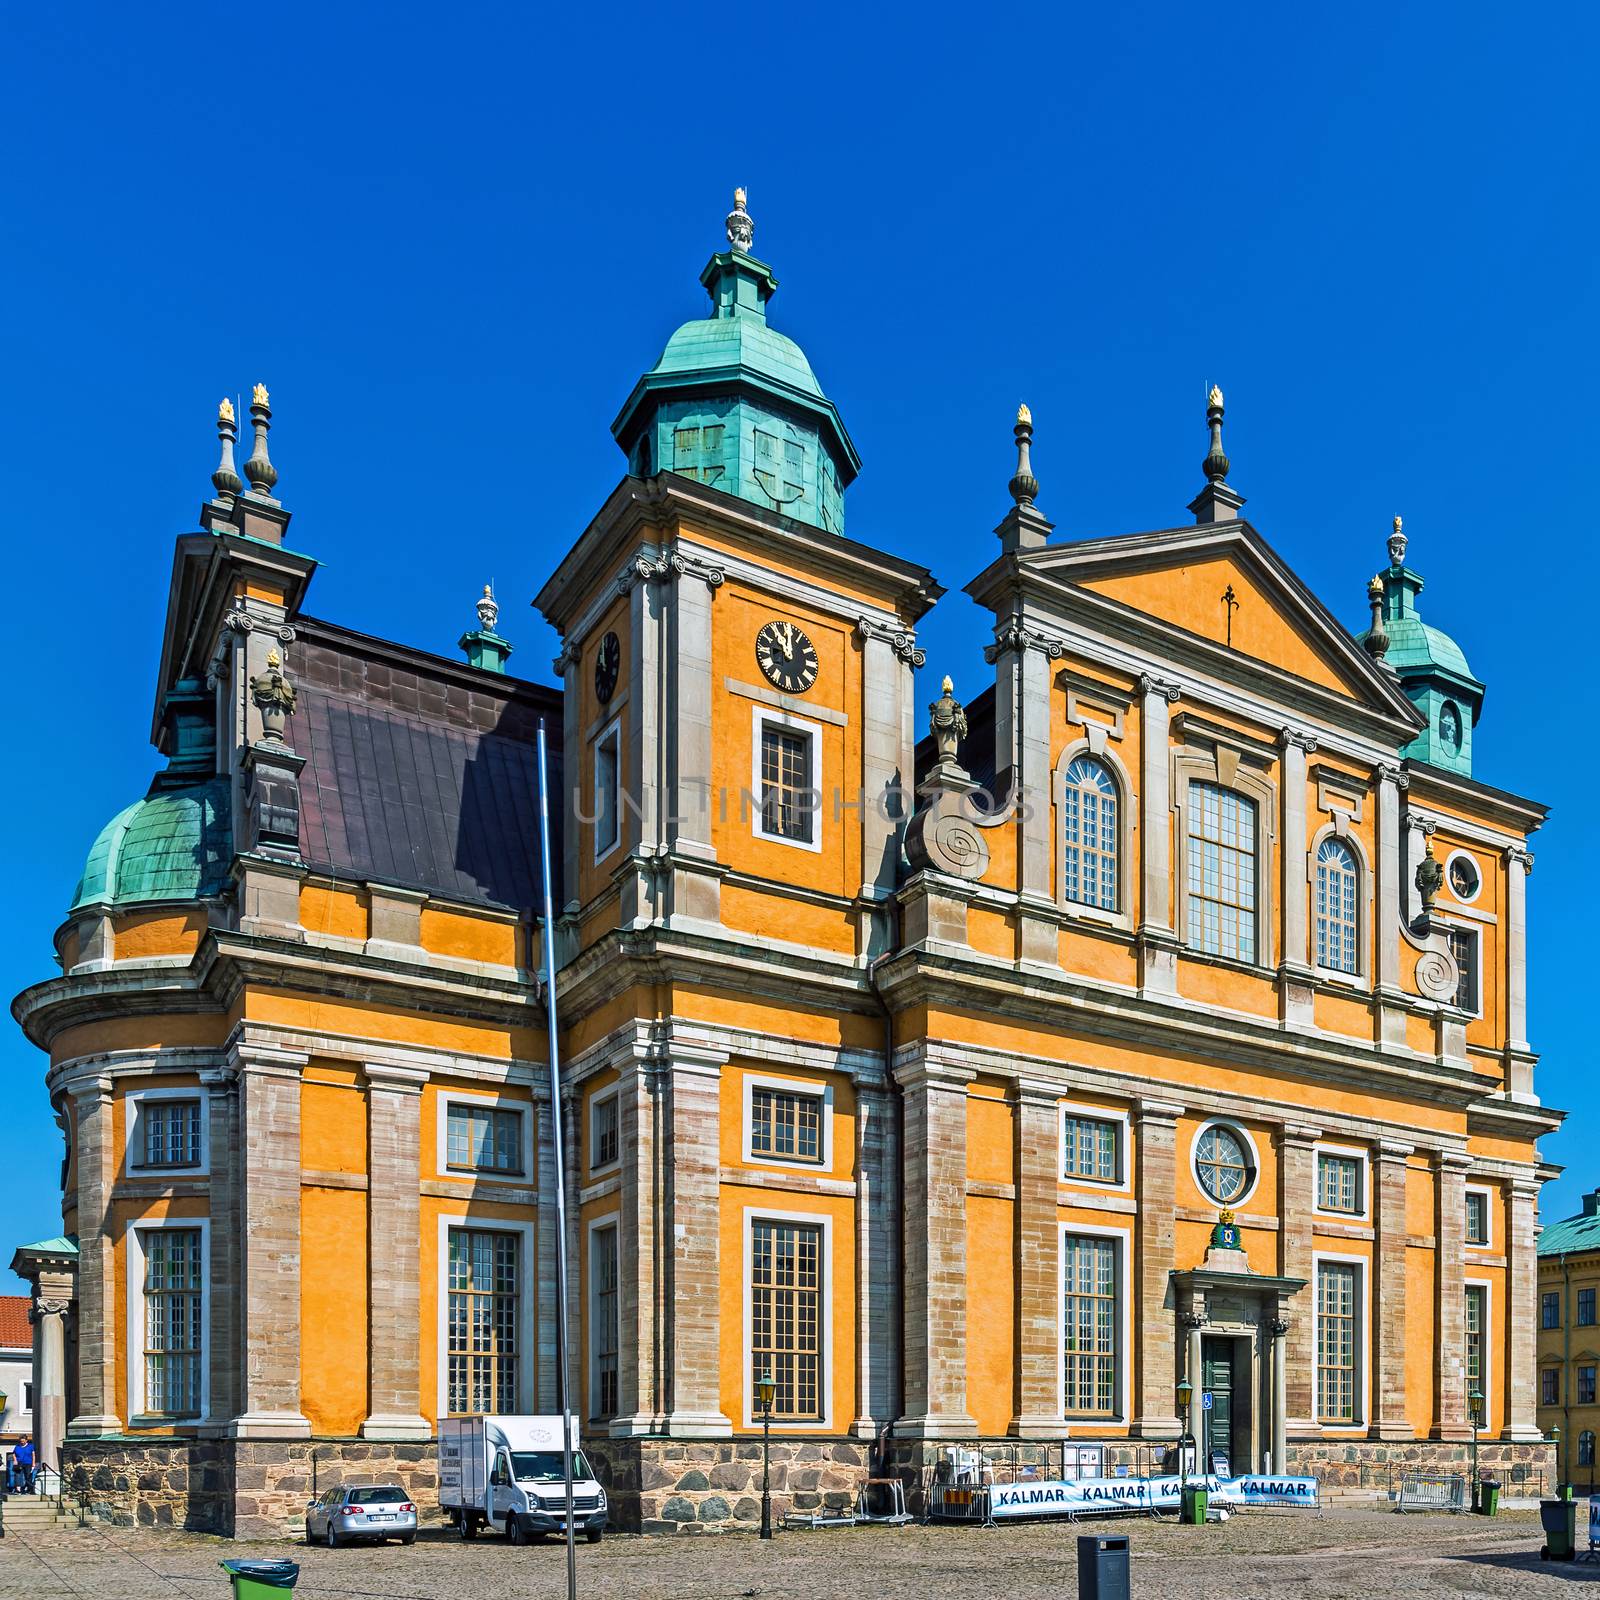 Kalmar Cathedral (Kalmar domkyrka), the Baroque church designed by Nicodemus Tessin built in the years 1660-1703.